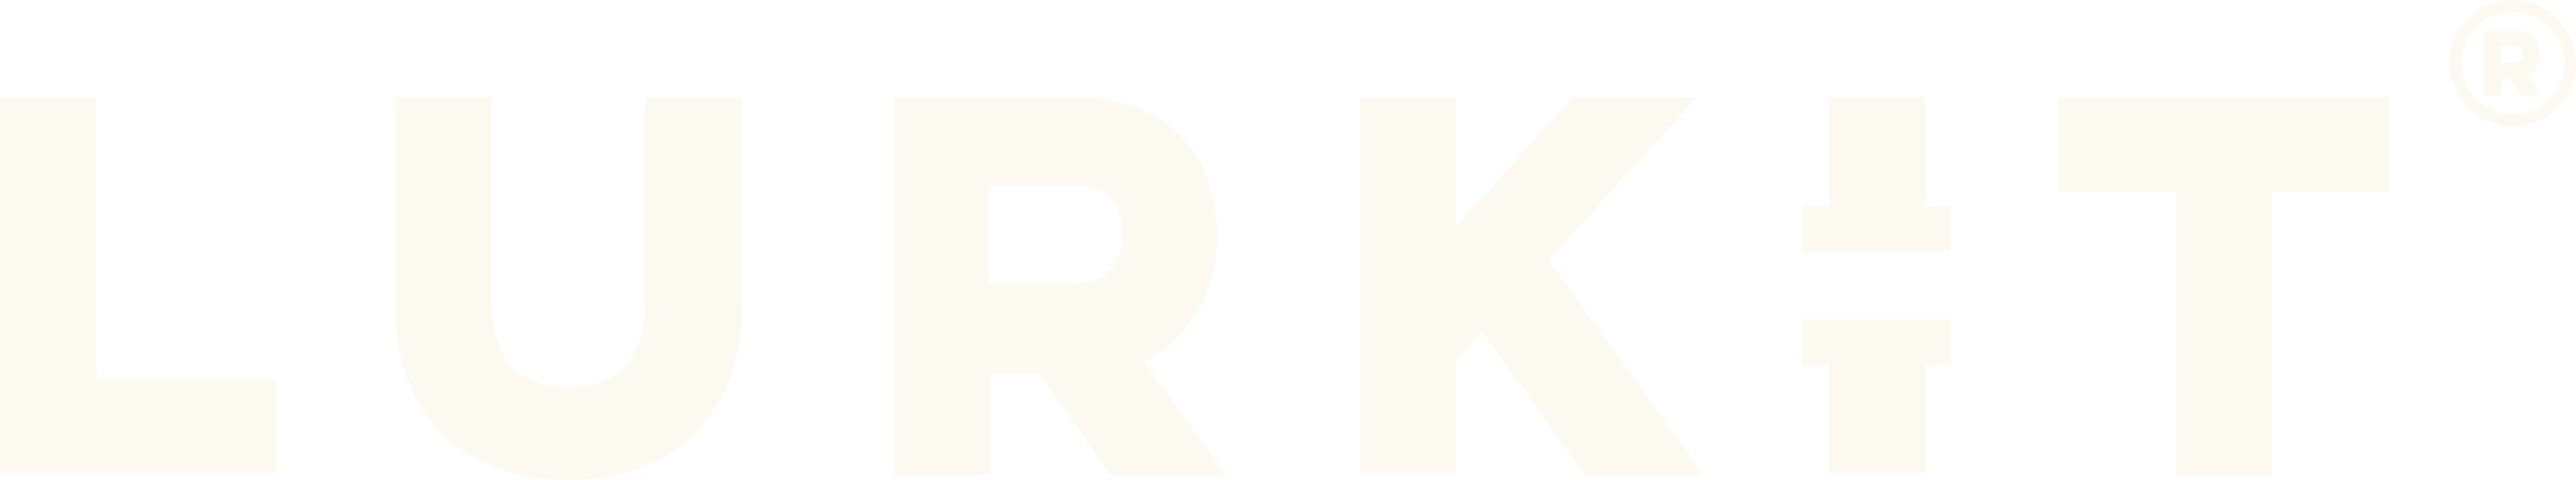 Lurkit-logo-default-eggshell-w_r_ext